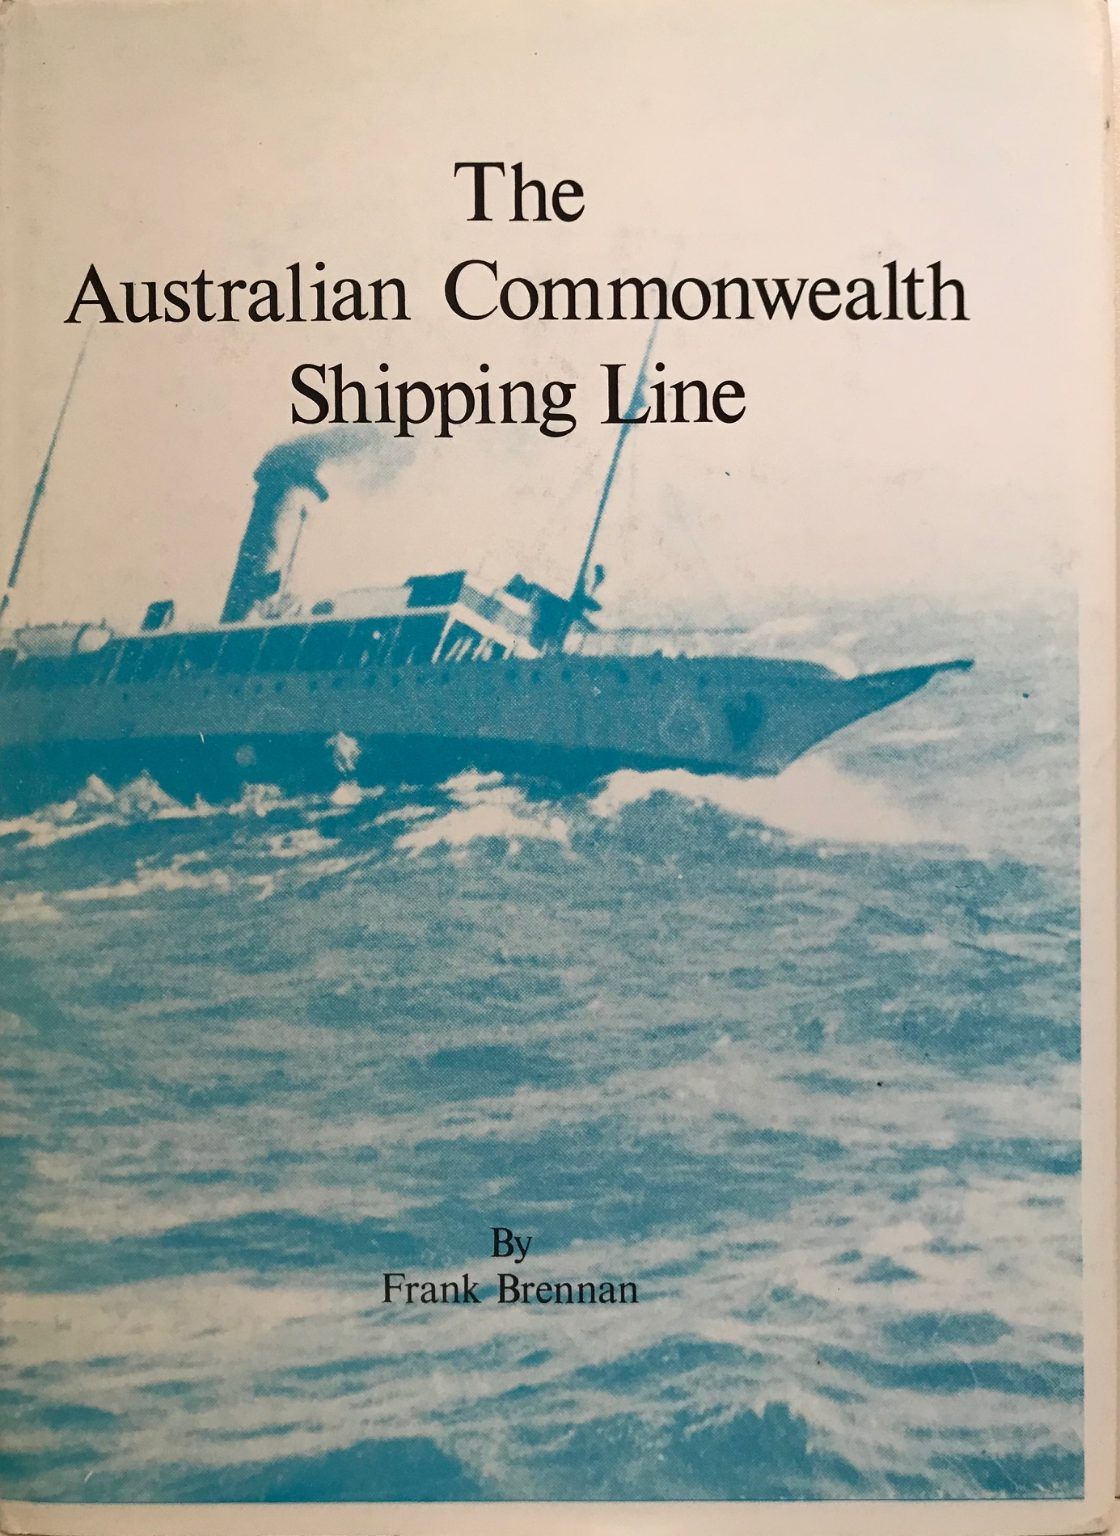 THE AUSTRALIAN COMMONWEALTH SHIPPING LINE